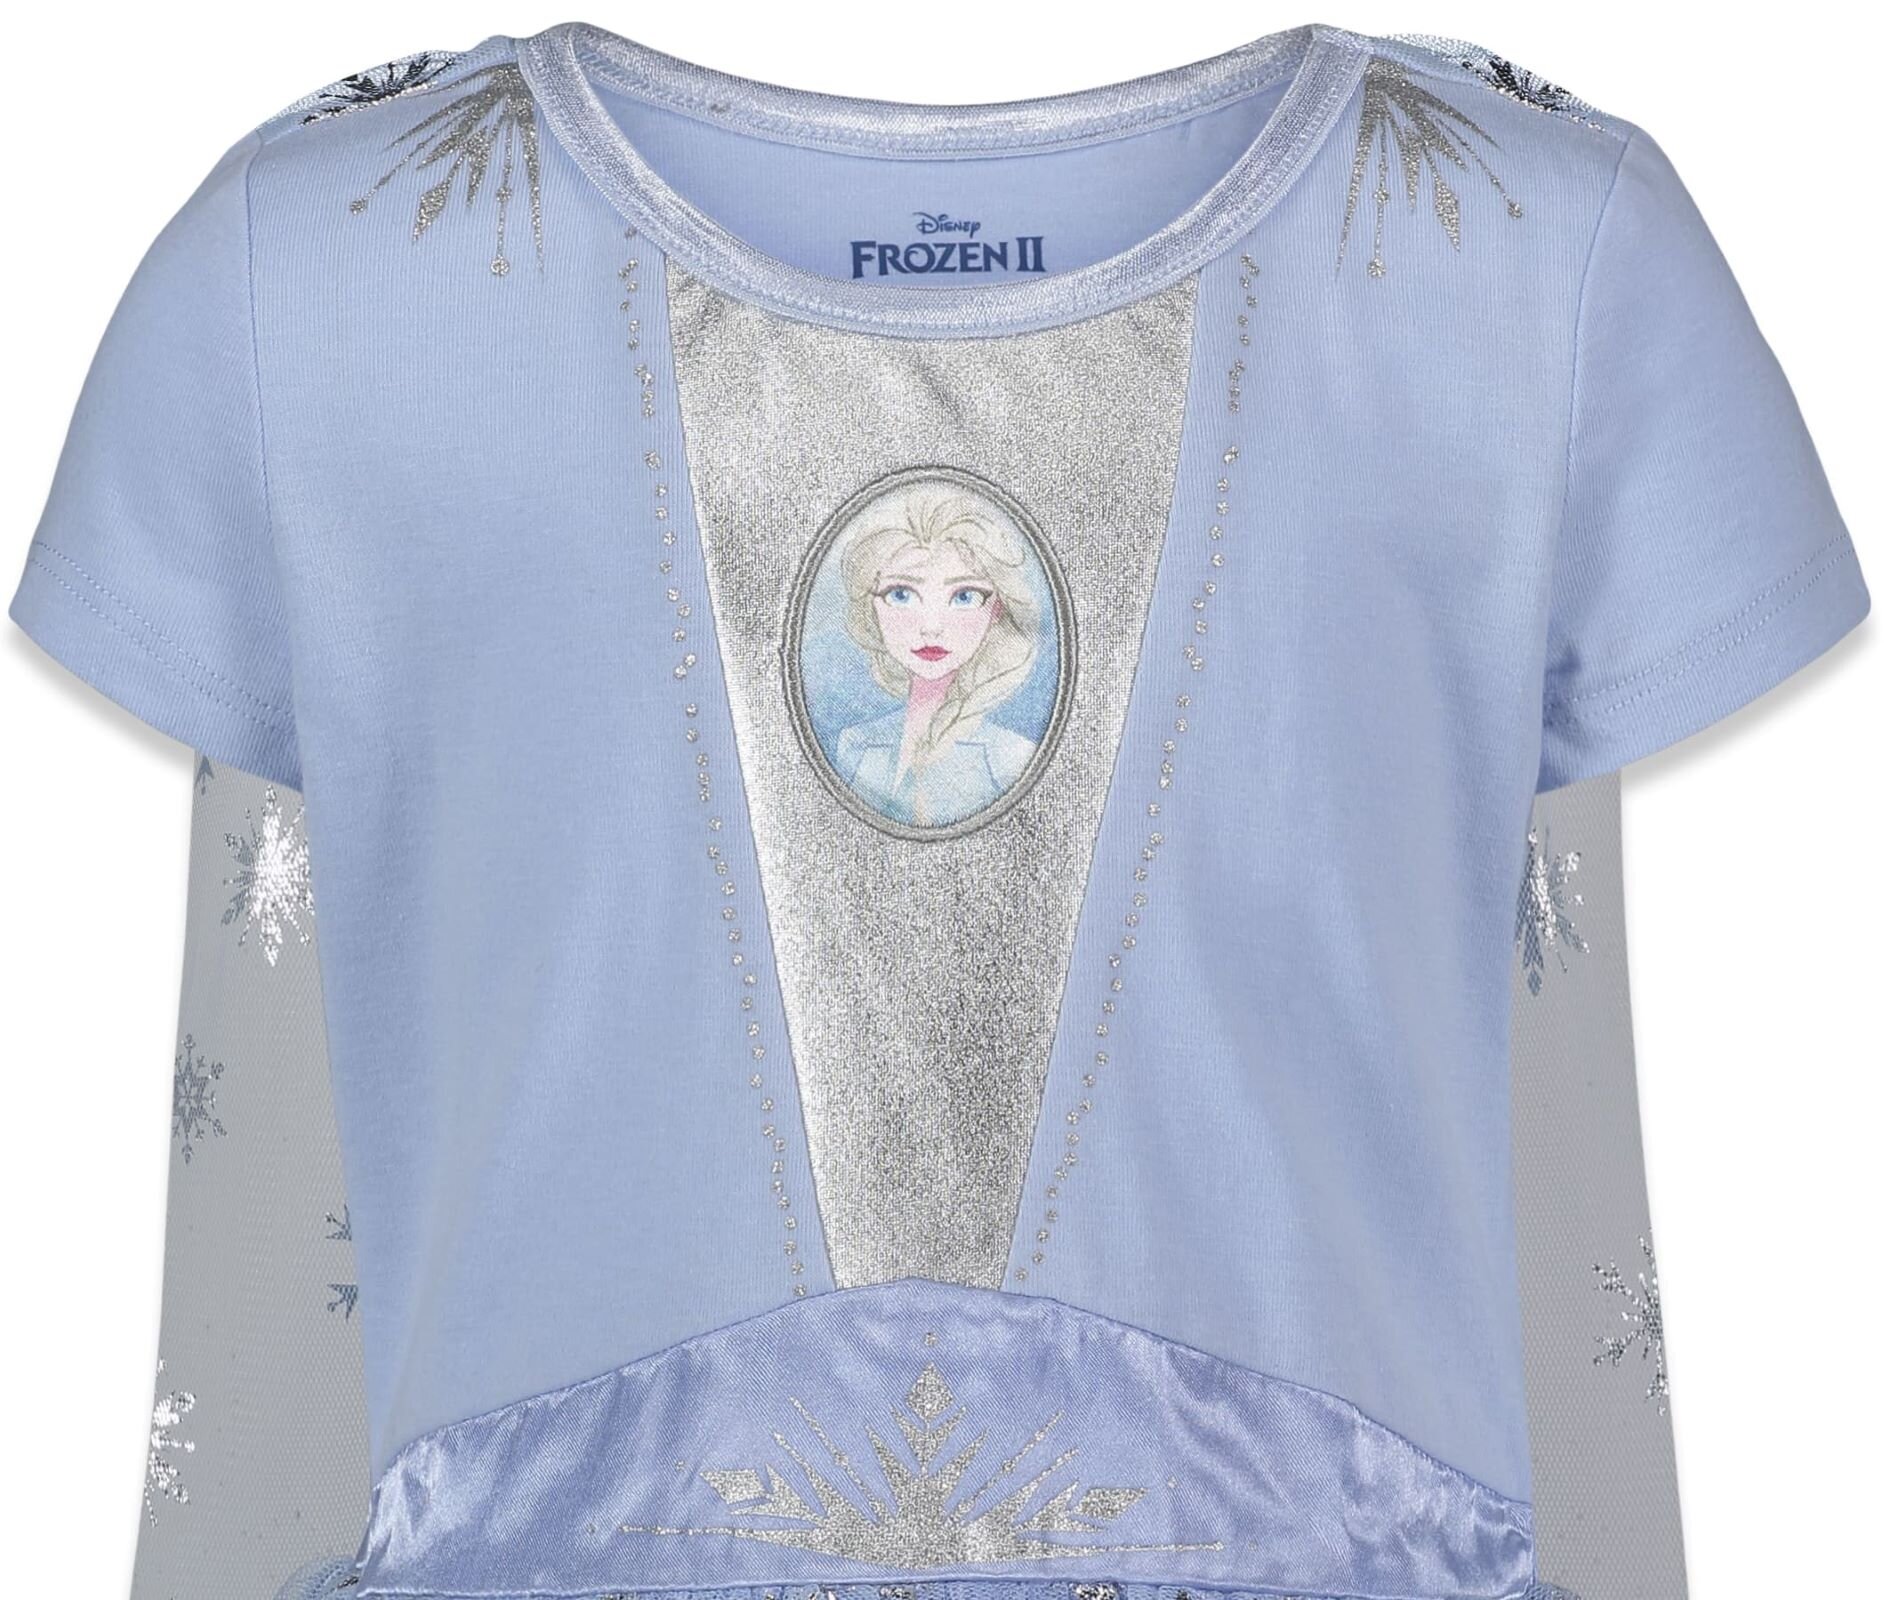 Disney Frozen Elsa Toddler Girls Gown and Headband Toddler to Big Kid - image 5 of 5